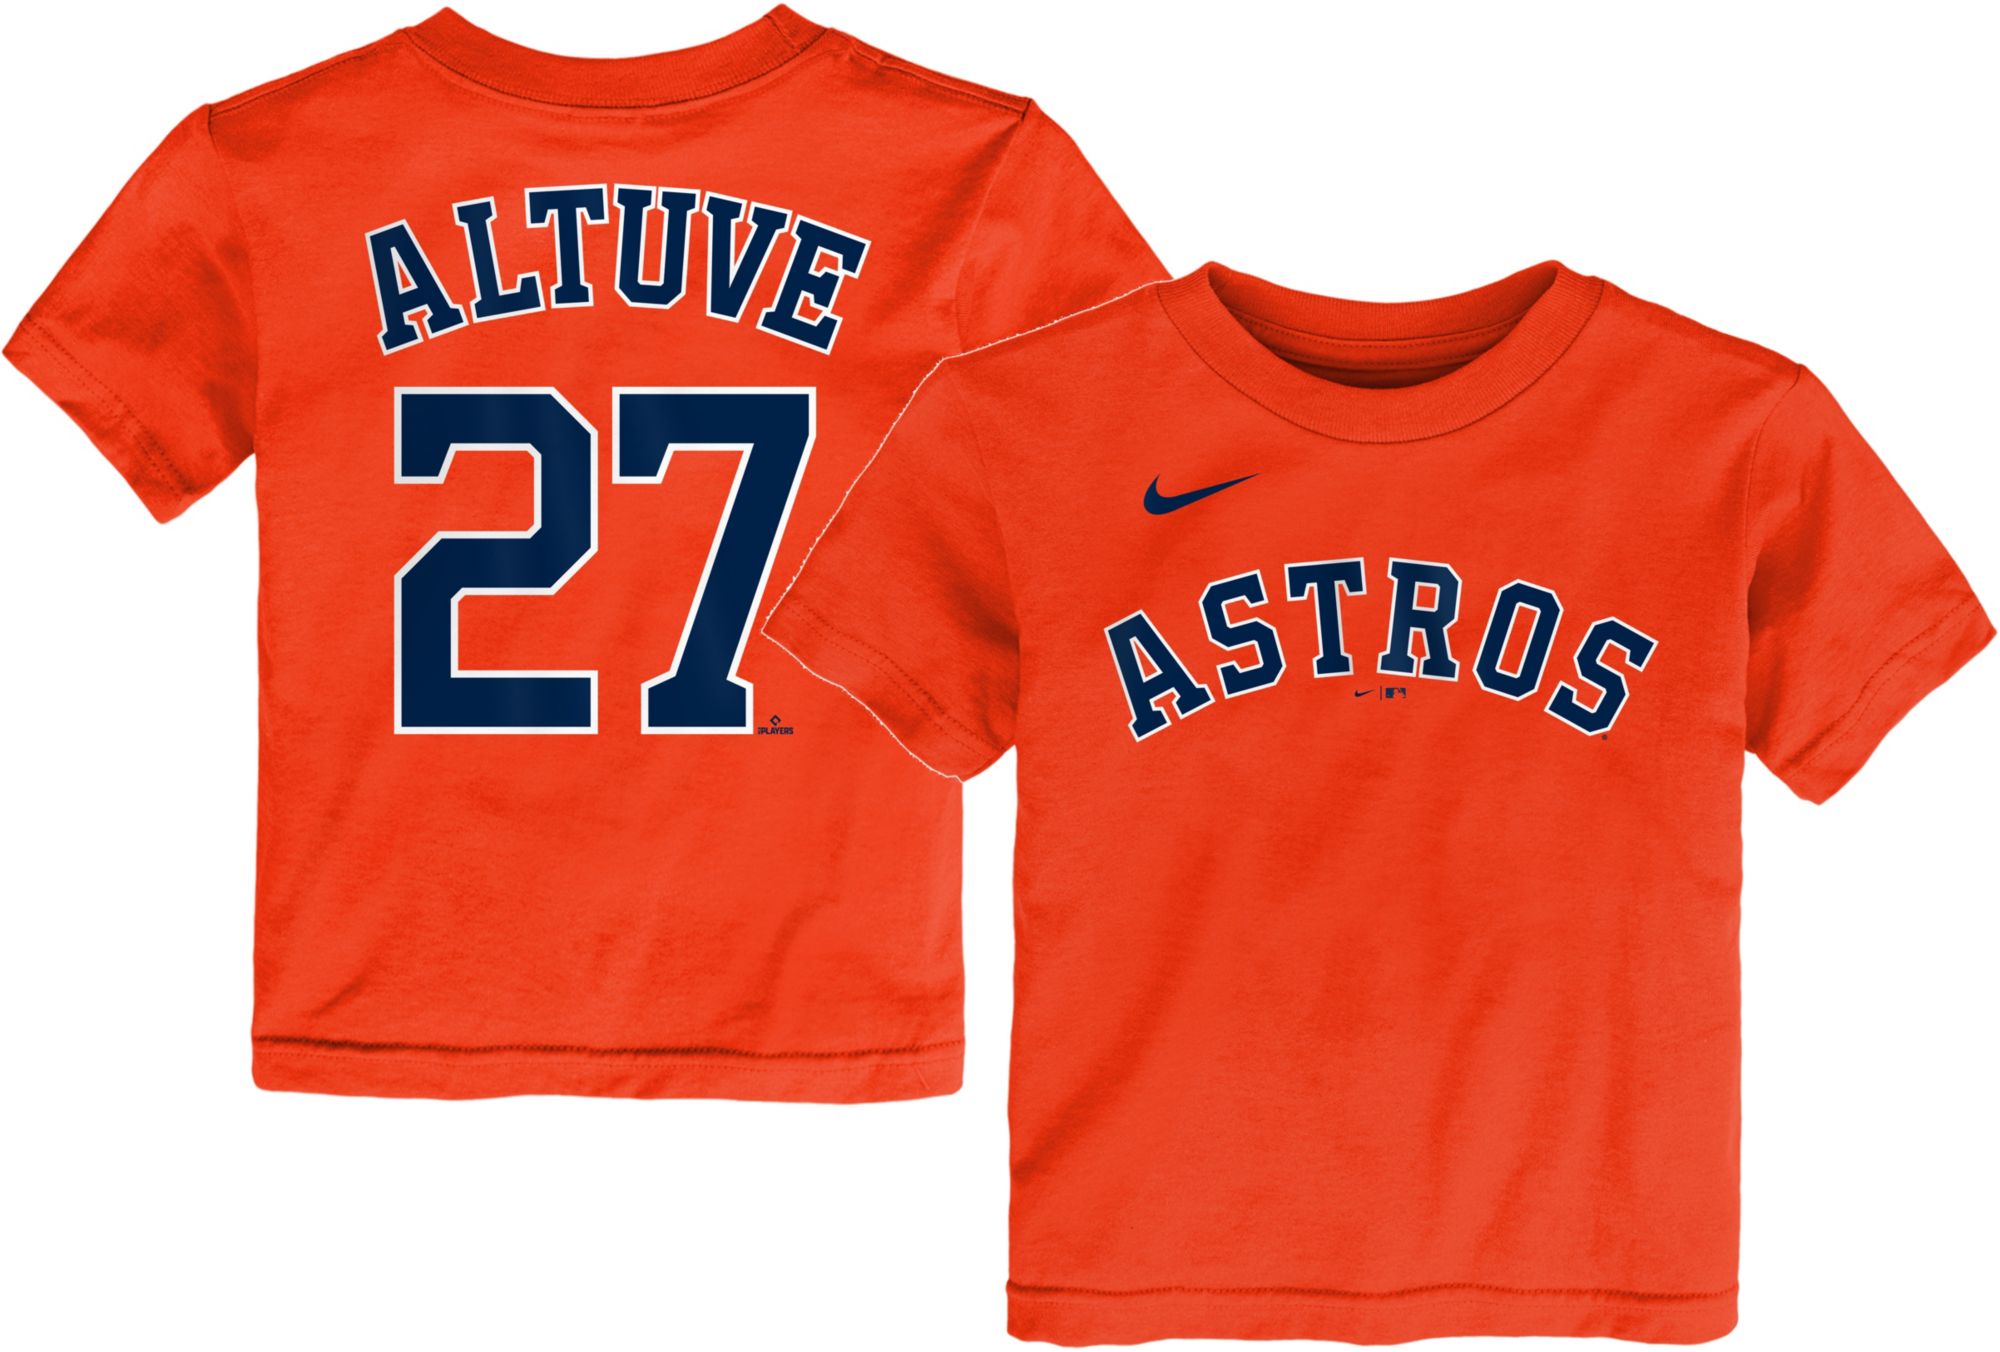 Nike Men's Replica Houston Astros Jose Altuve #27 Grey Cool Base Jersey